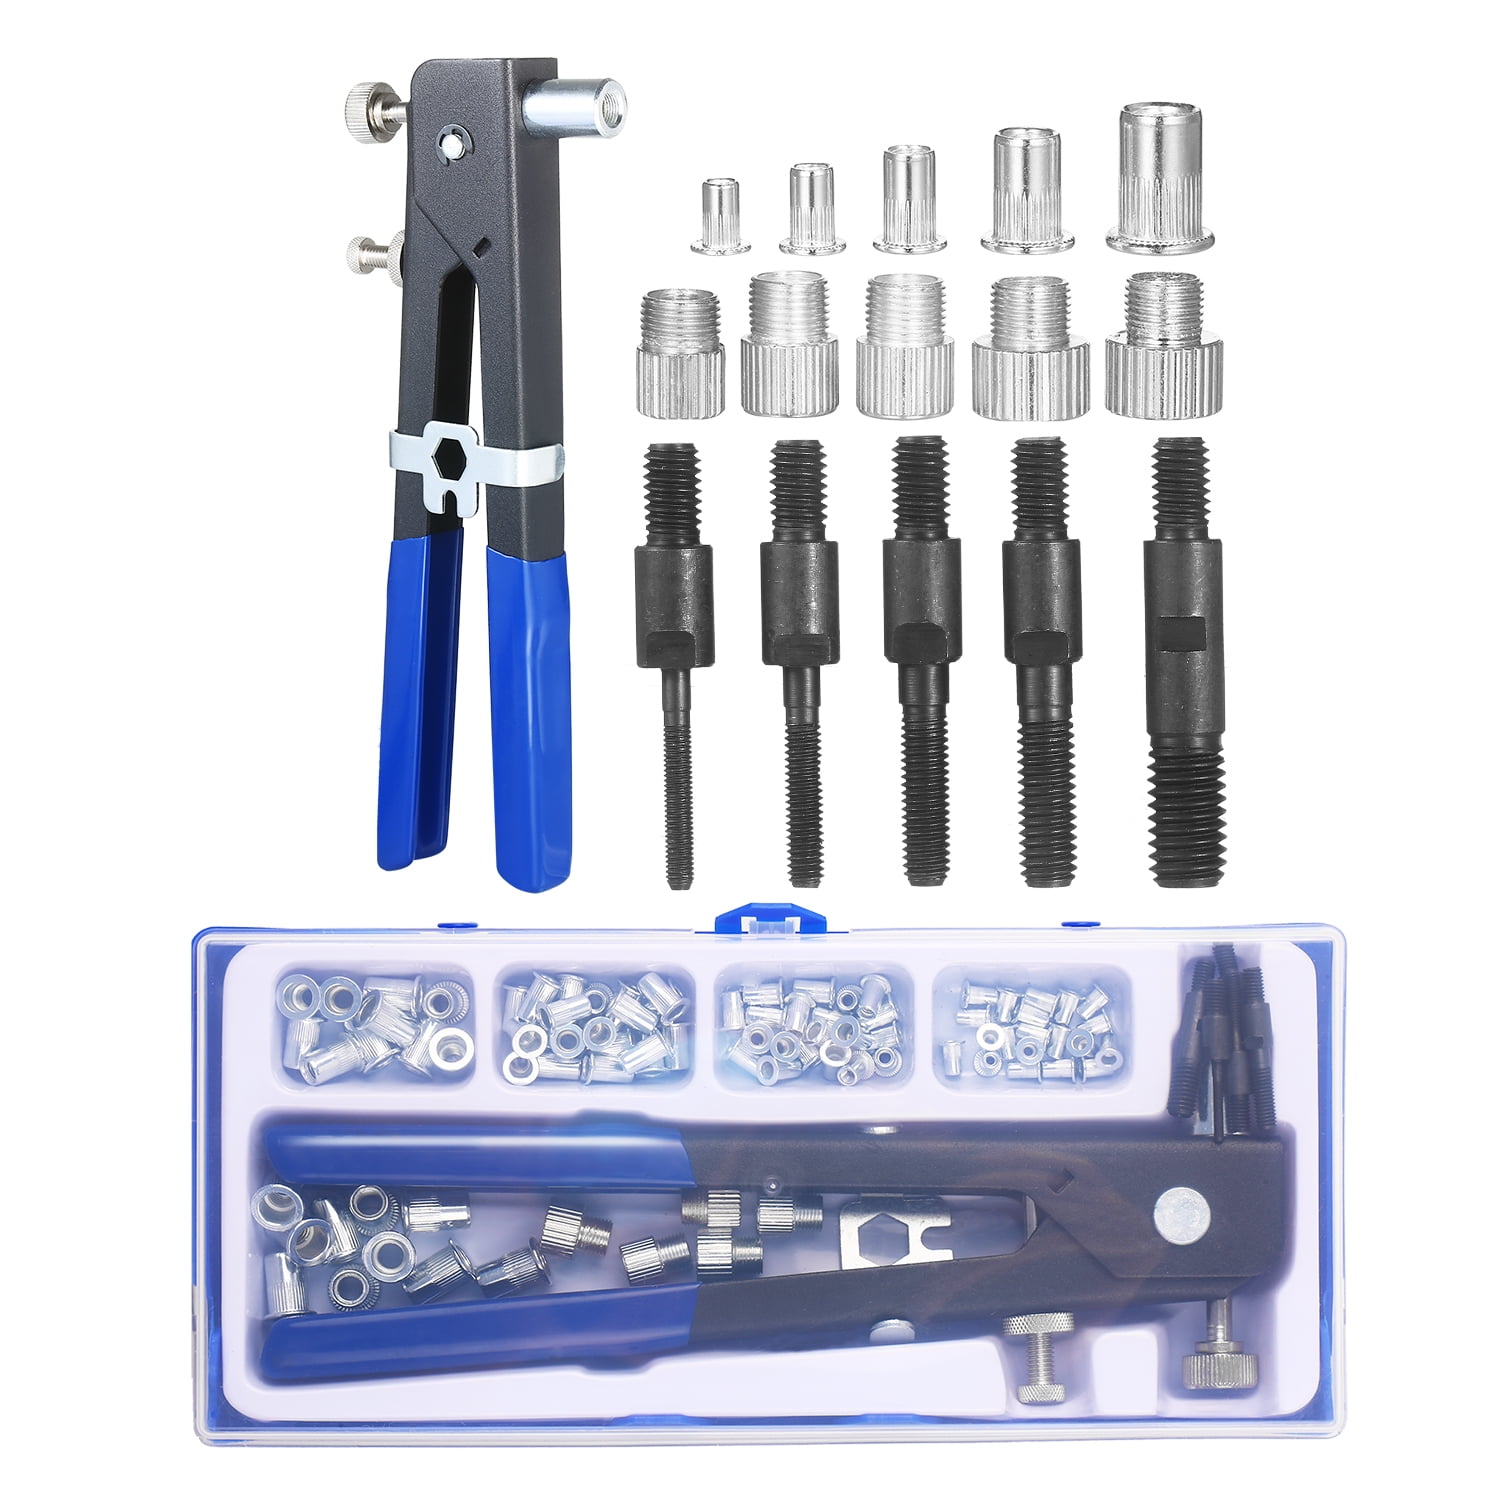 Jeankak Rivet GunTool Rivet Tool Blind Rivet Nuts 86pcs/Set Corrosion Protection for Riveting